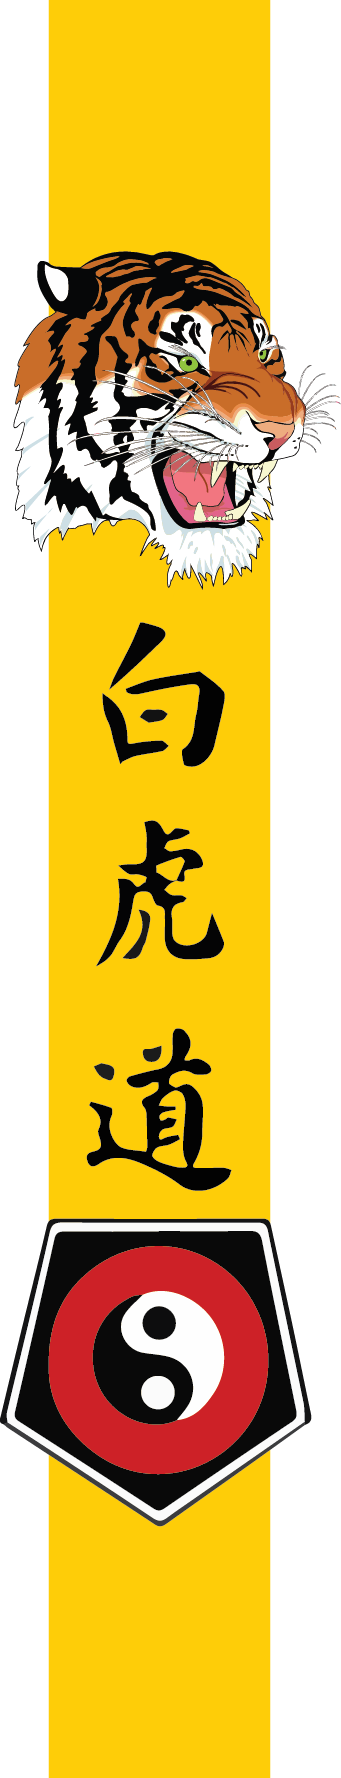 Bac Fu Do logo